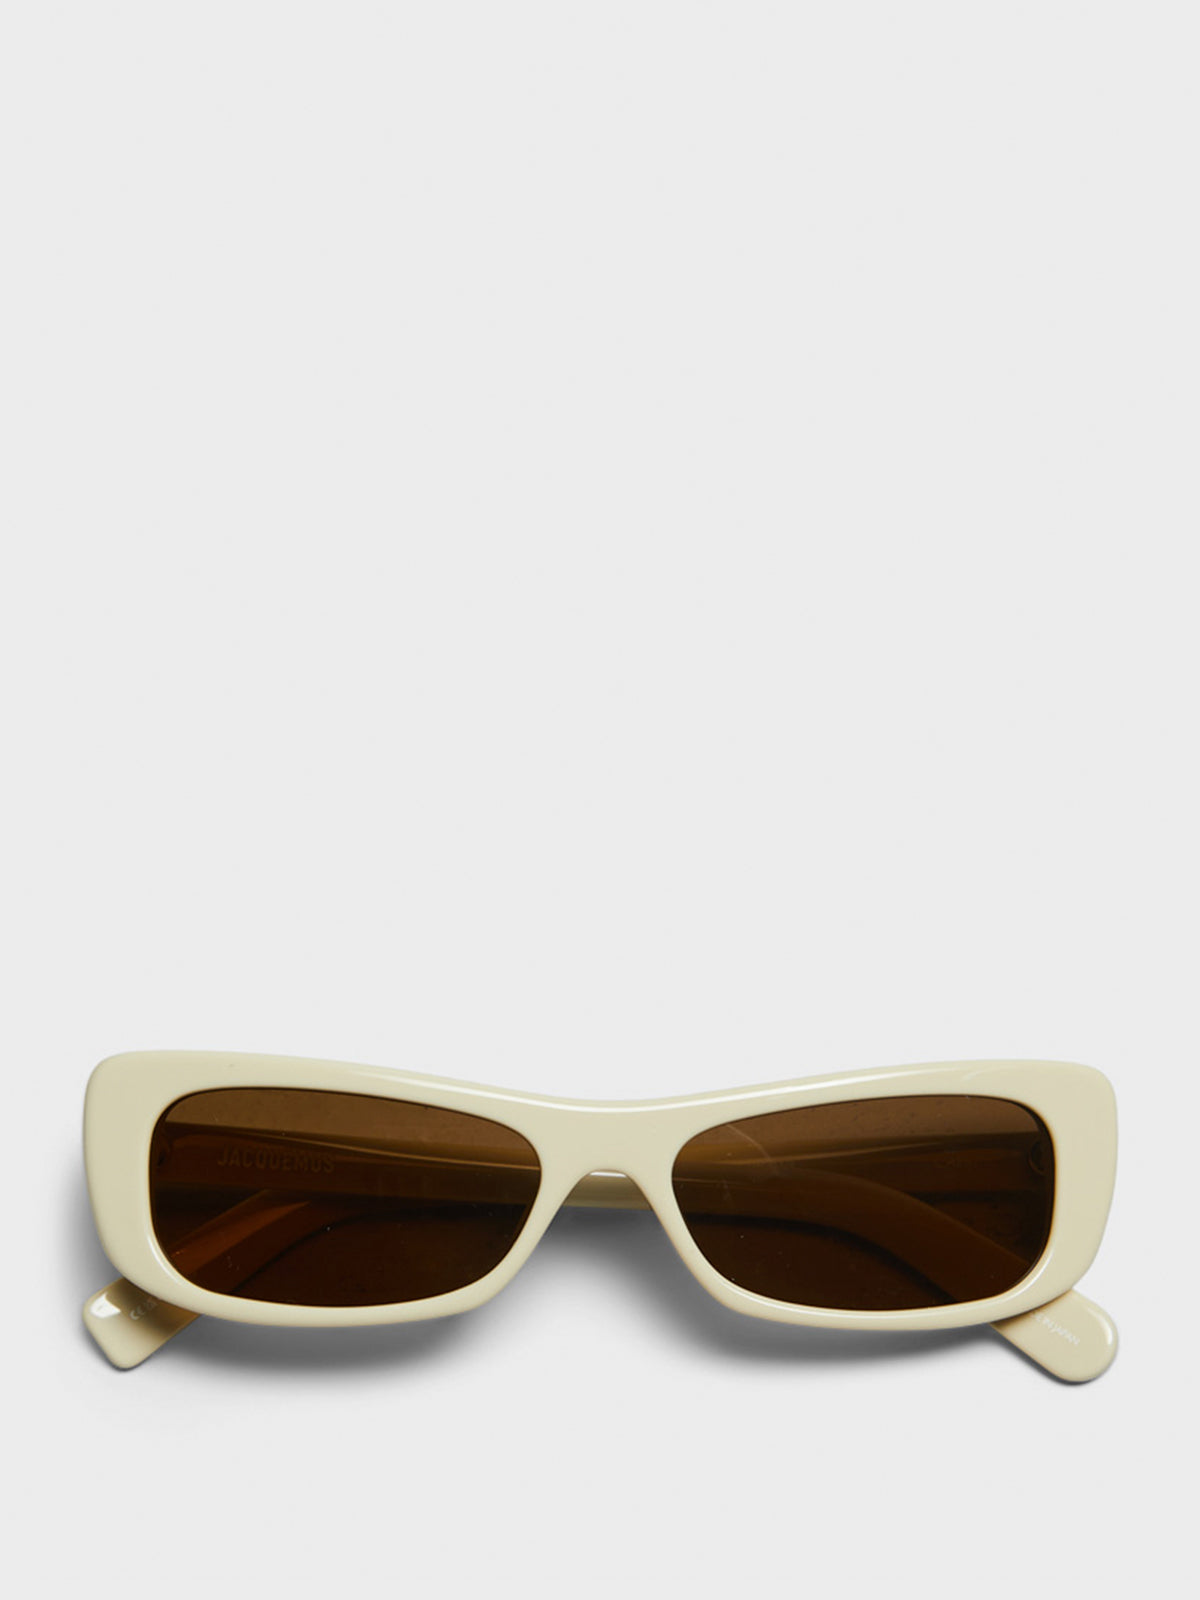 Capri Sunglasses in Beige, Yellow Gold and Brown